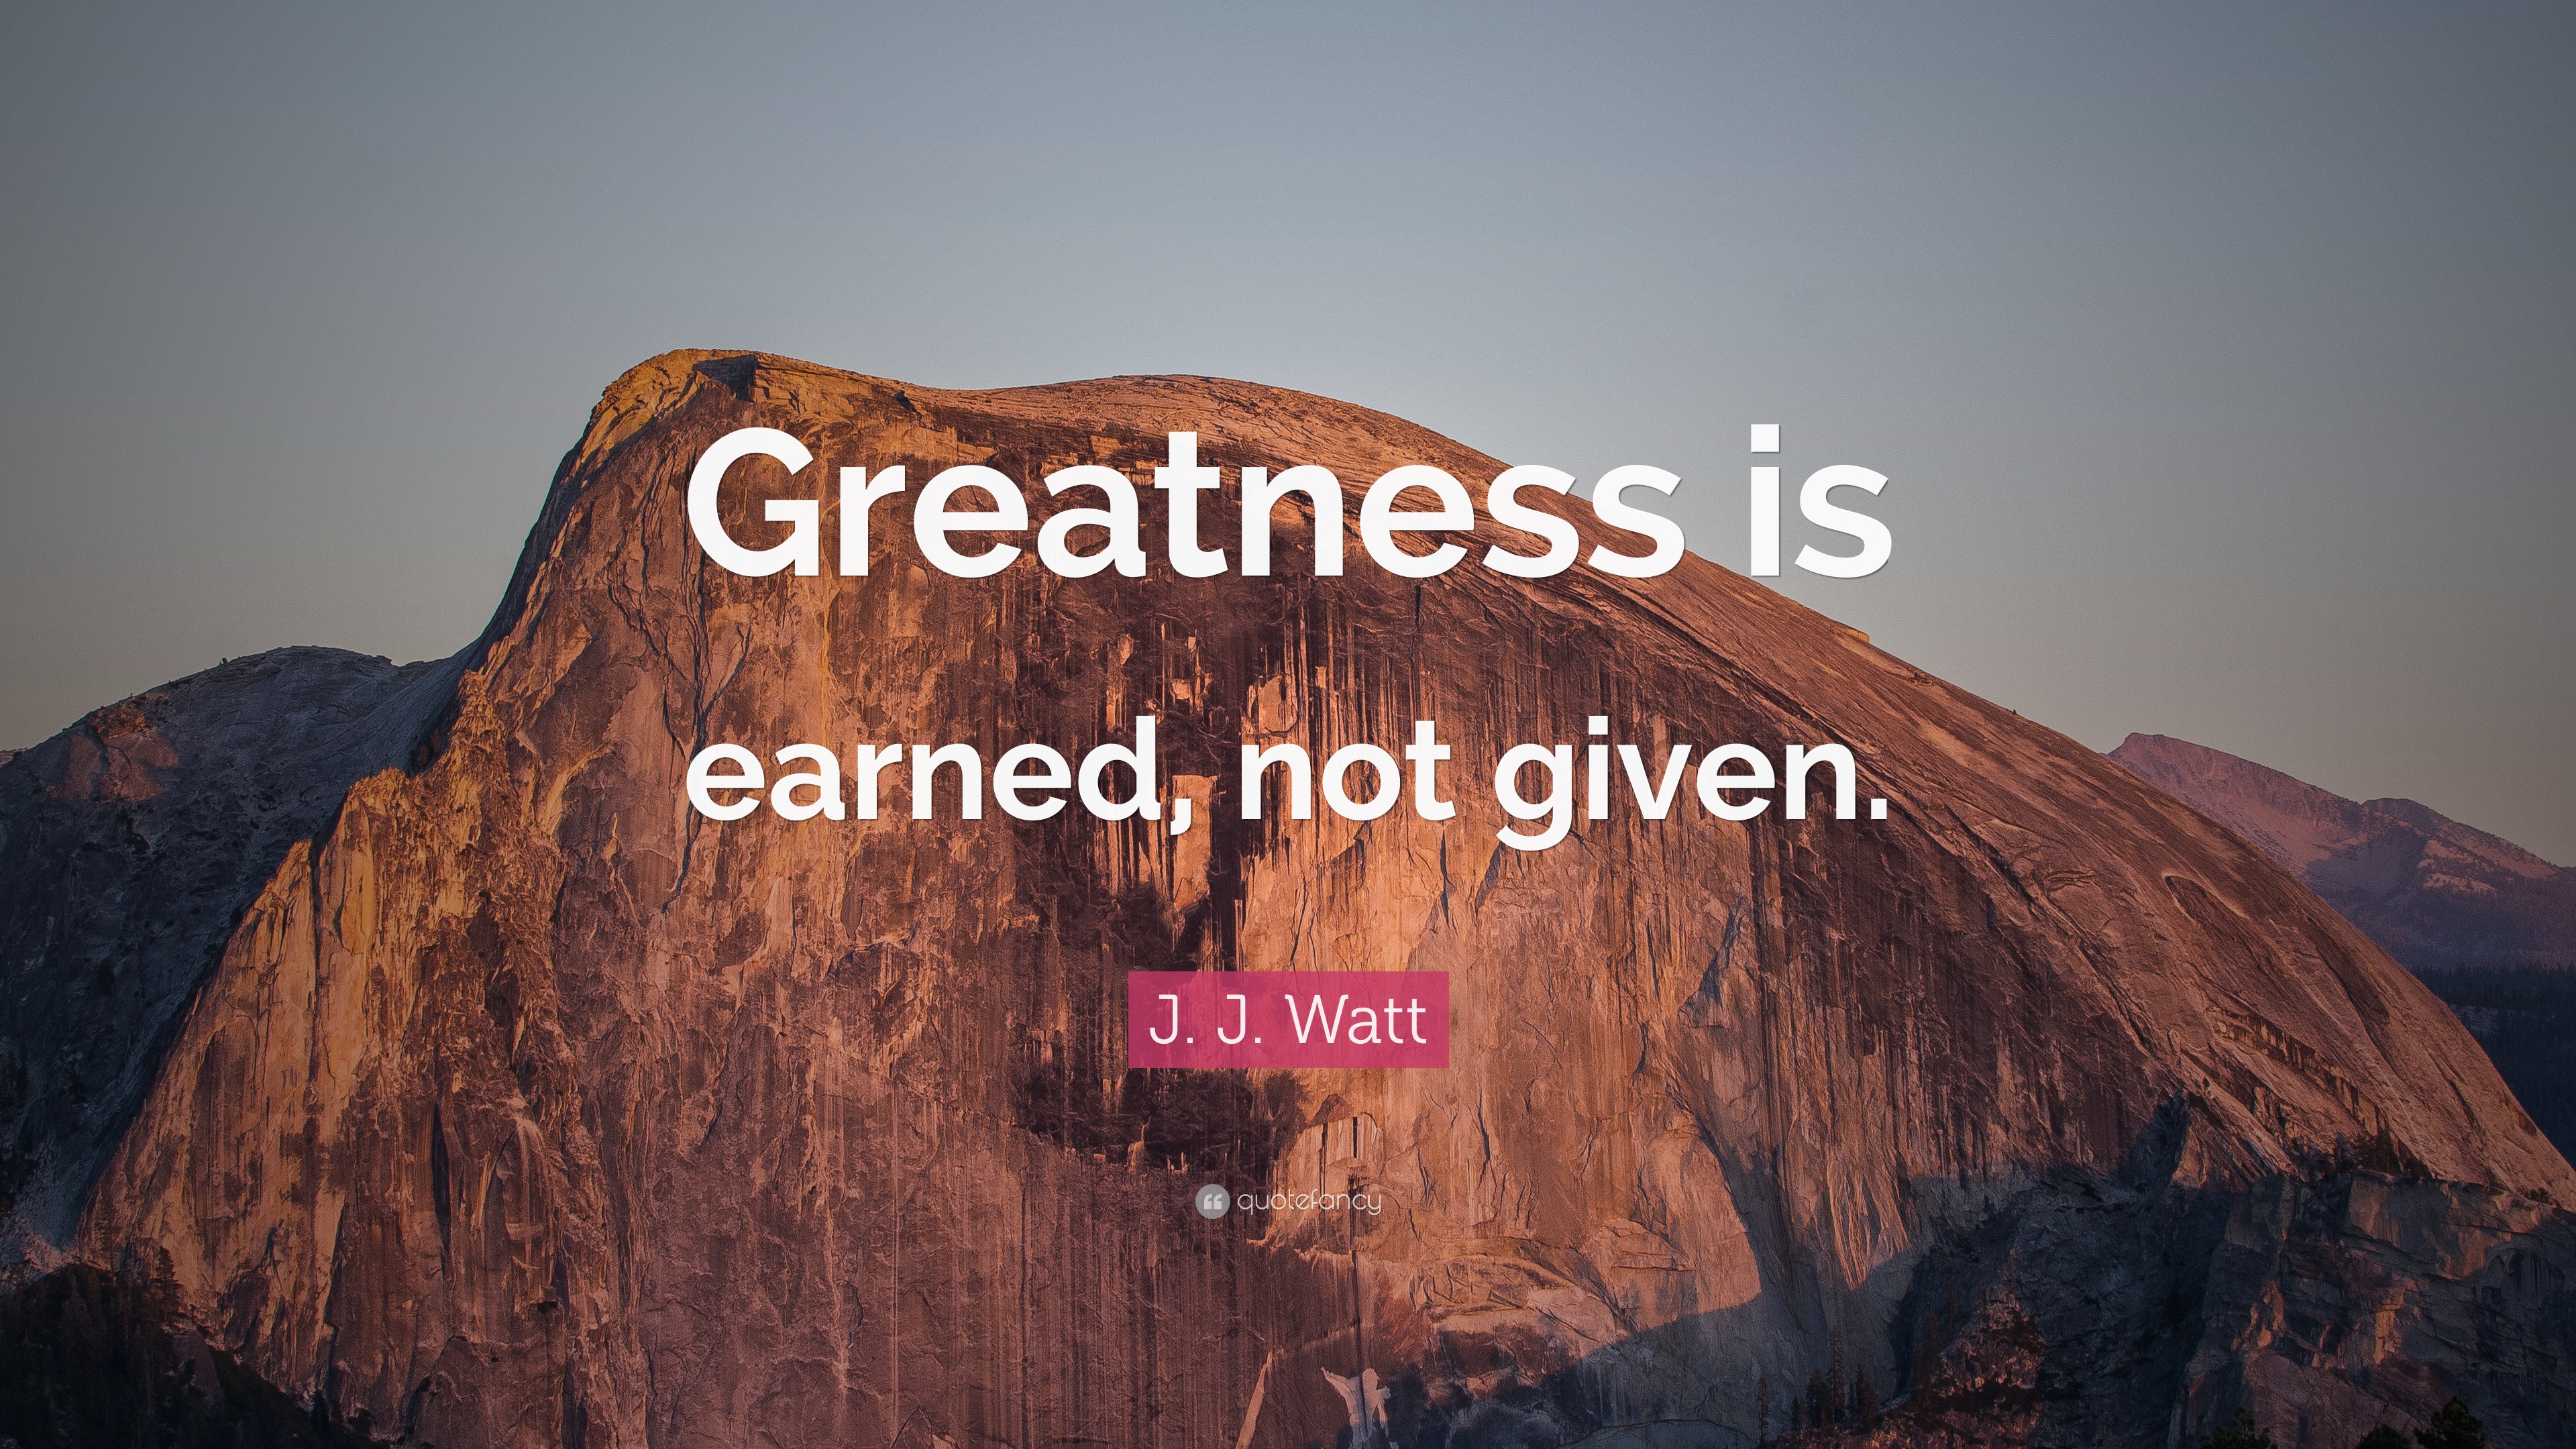 J. J. Watt Quote: "Greatness is earned, not given." (12 wallpapers) - Quotefancy